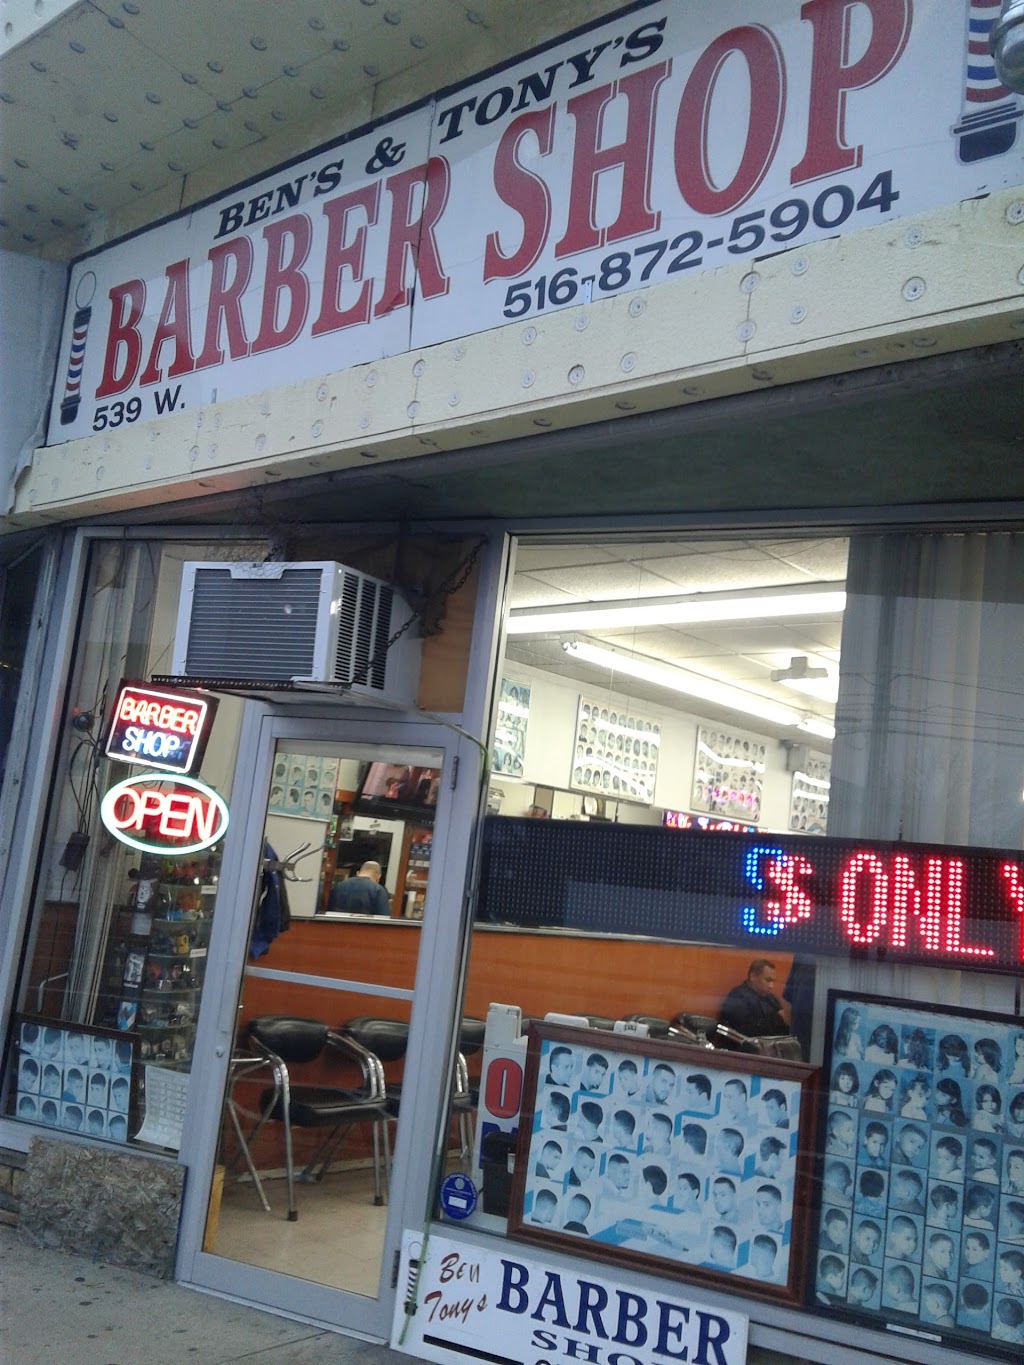 Bens & Tonys Classic Barber Shop | 539 W Merrick Rd, Valley Stream, NY 11580 | Phone: (516) 872-5904